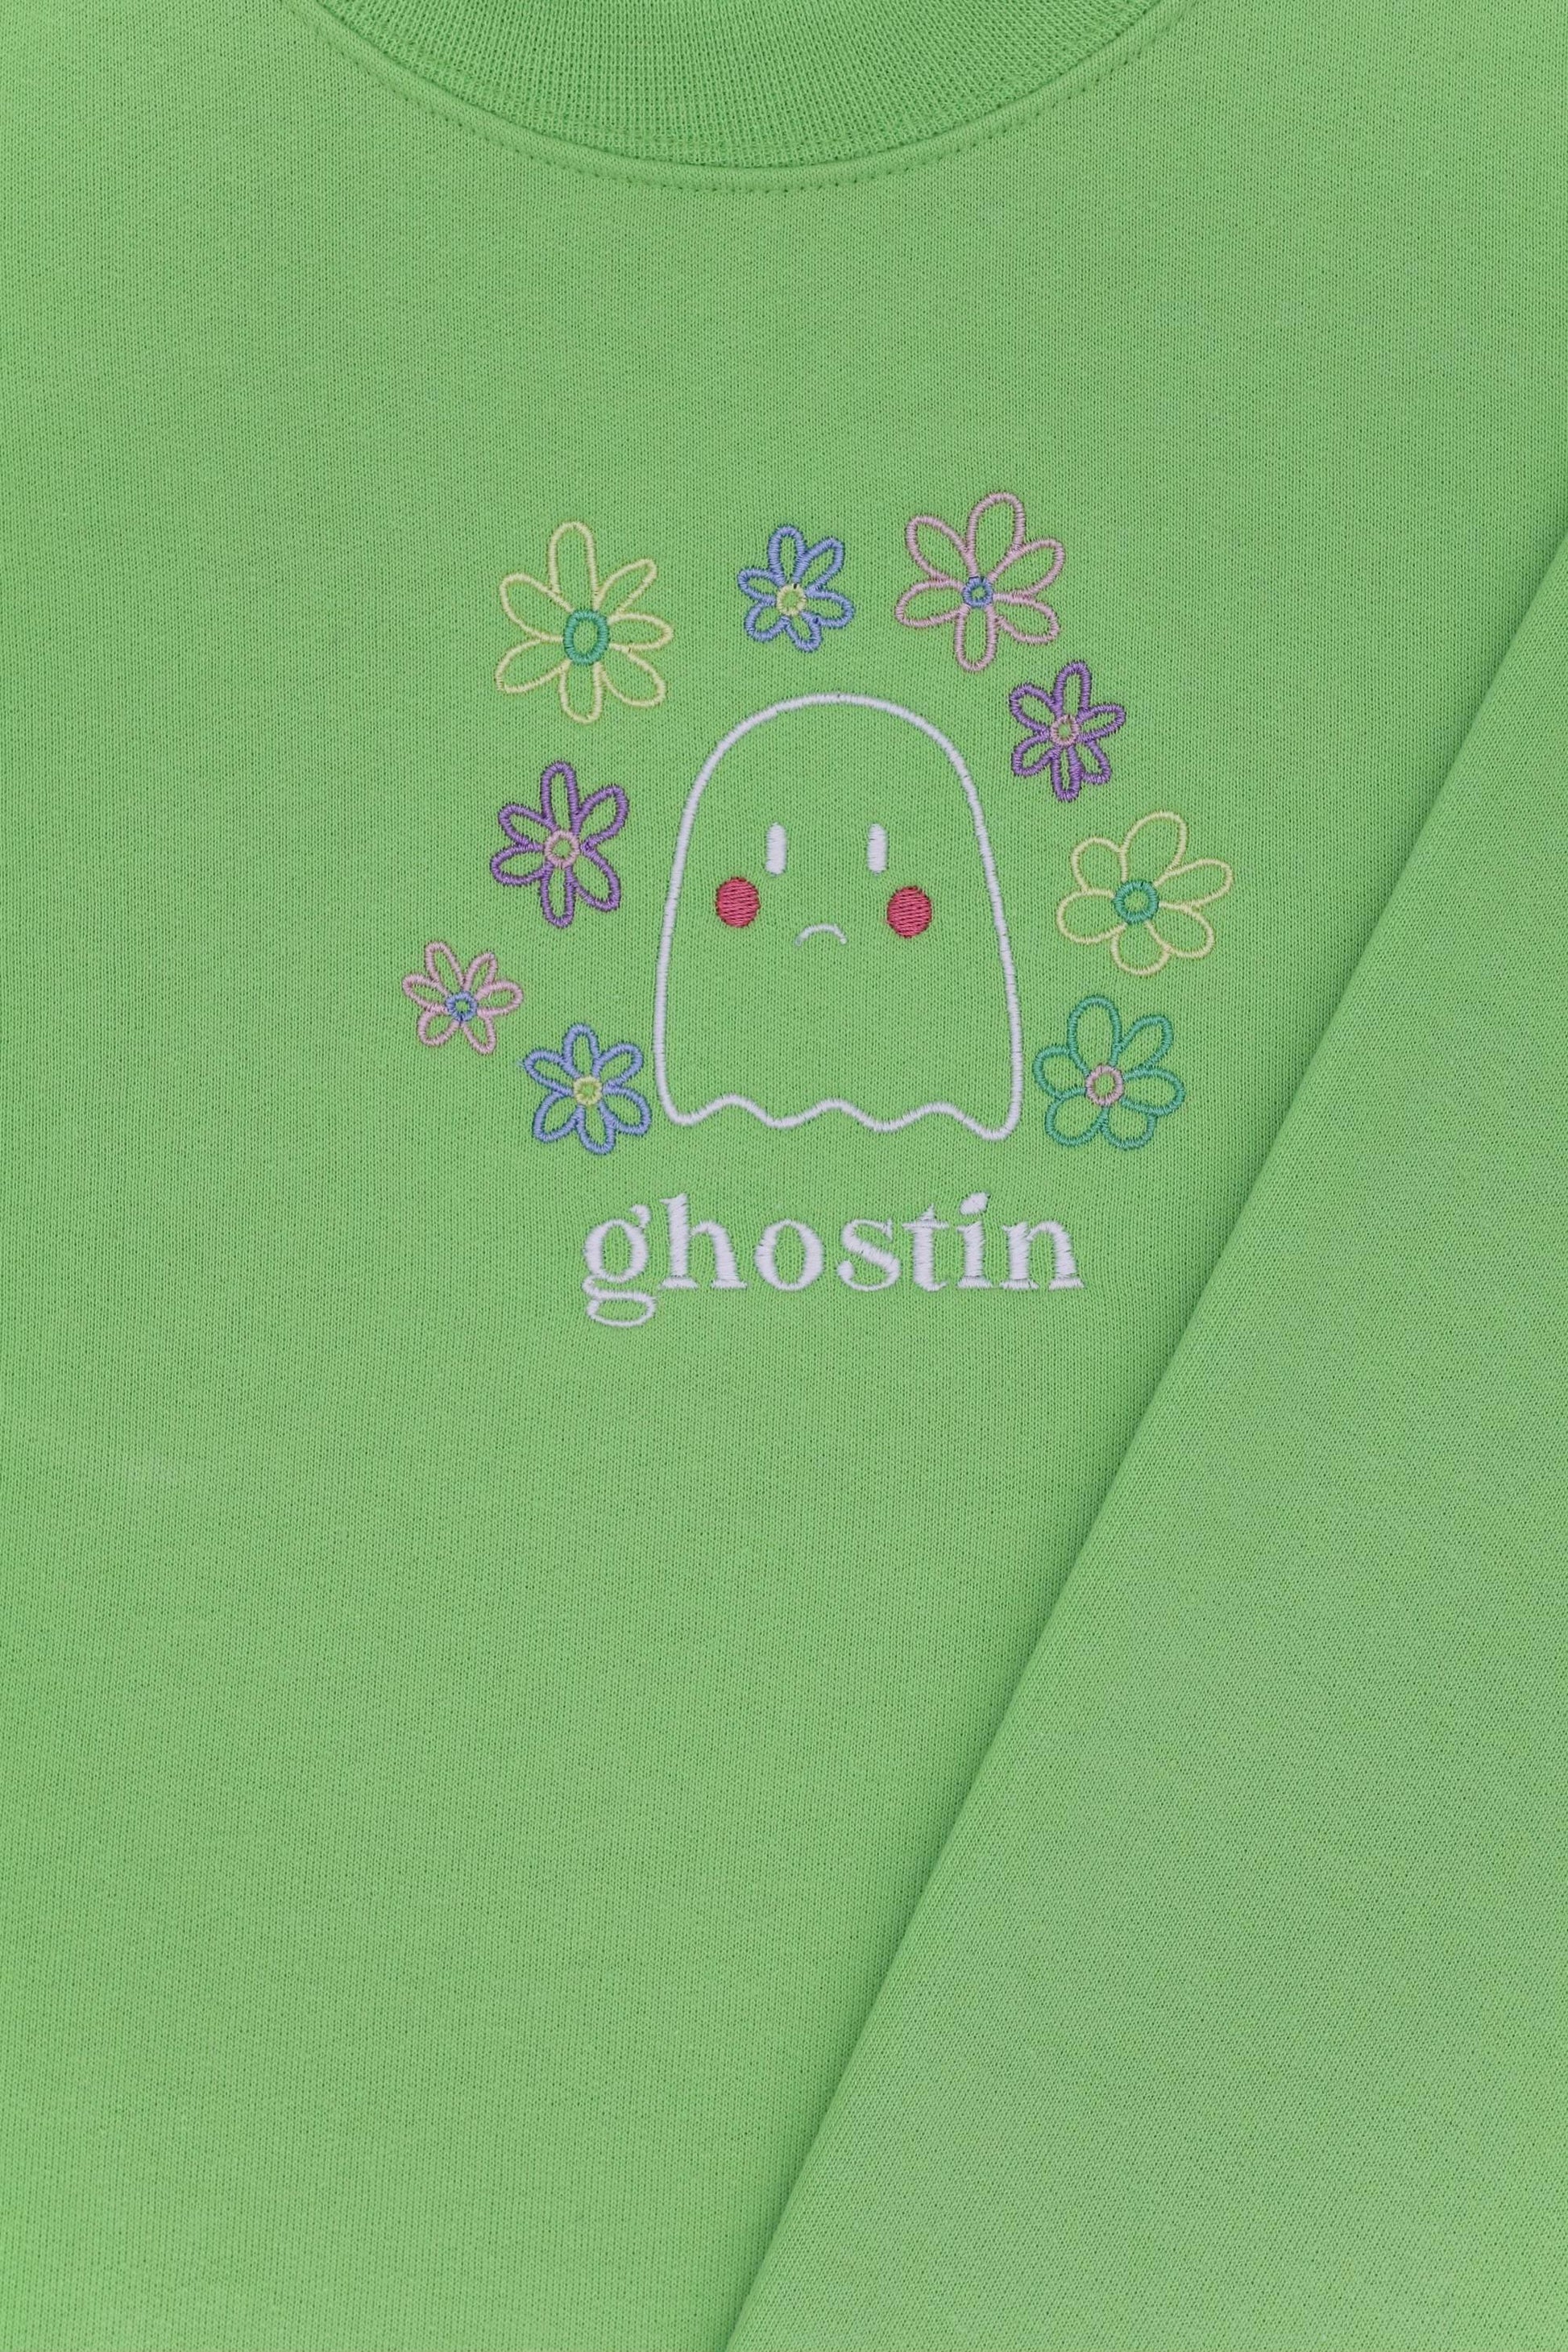 Ariana Grande - thank u, next - Ghostin Sweatshirt